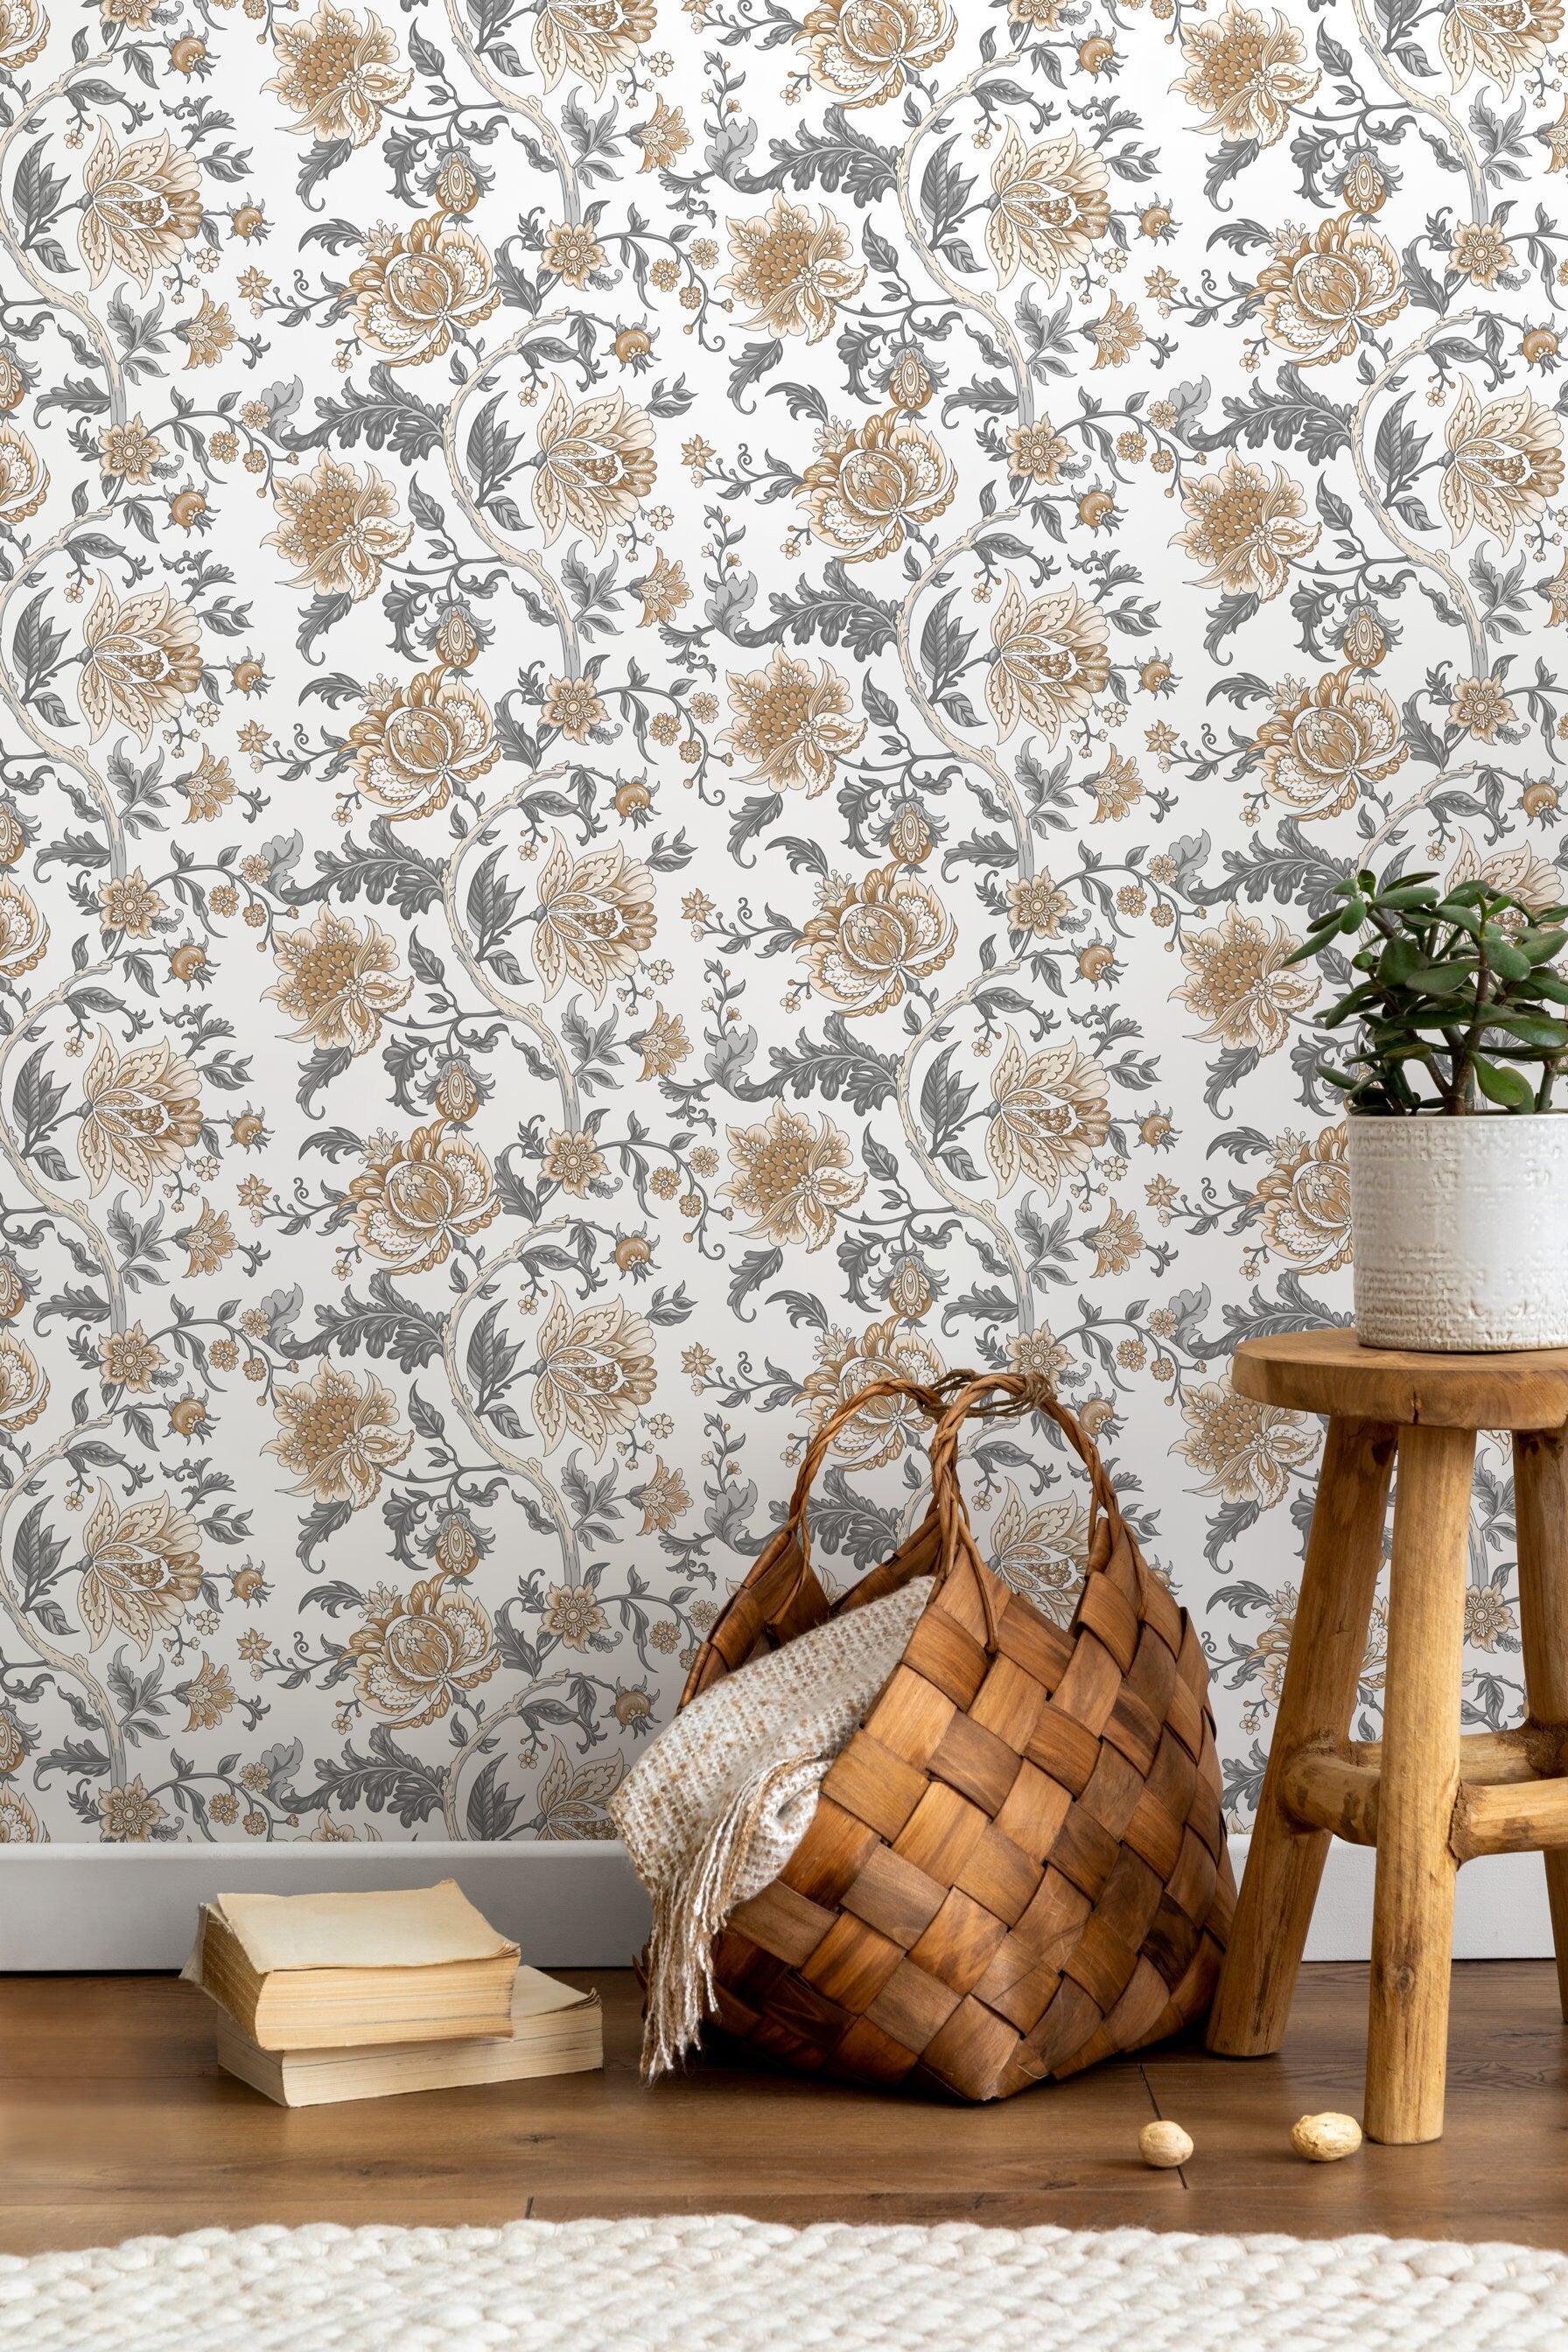 Neutral Vintage Floral Wallpaper / Peel and Stick Wallpaper Removable Wallpaper Home Decor Wall Art Wall Decor Room Decor - D130